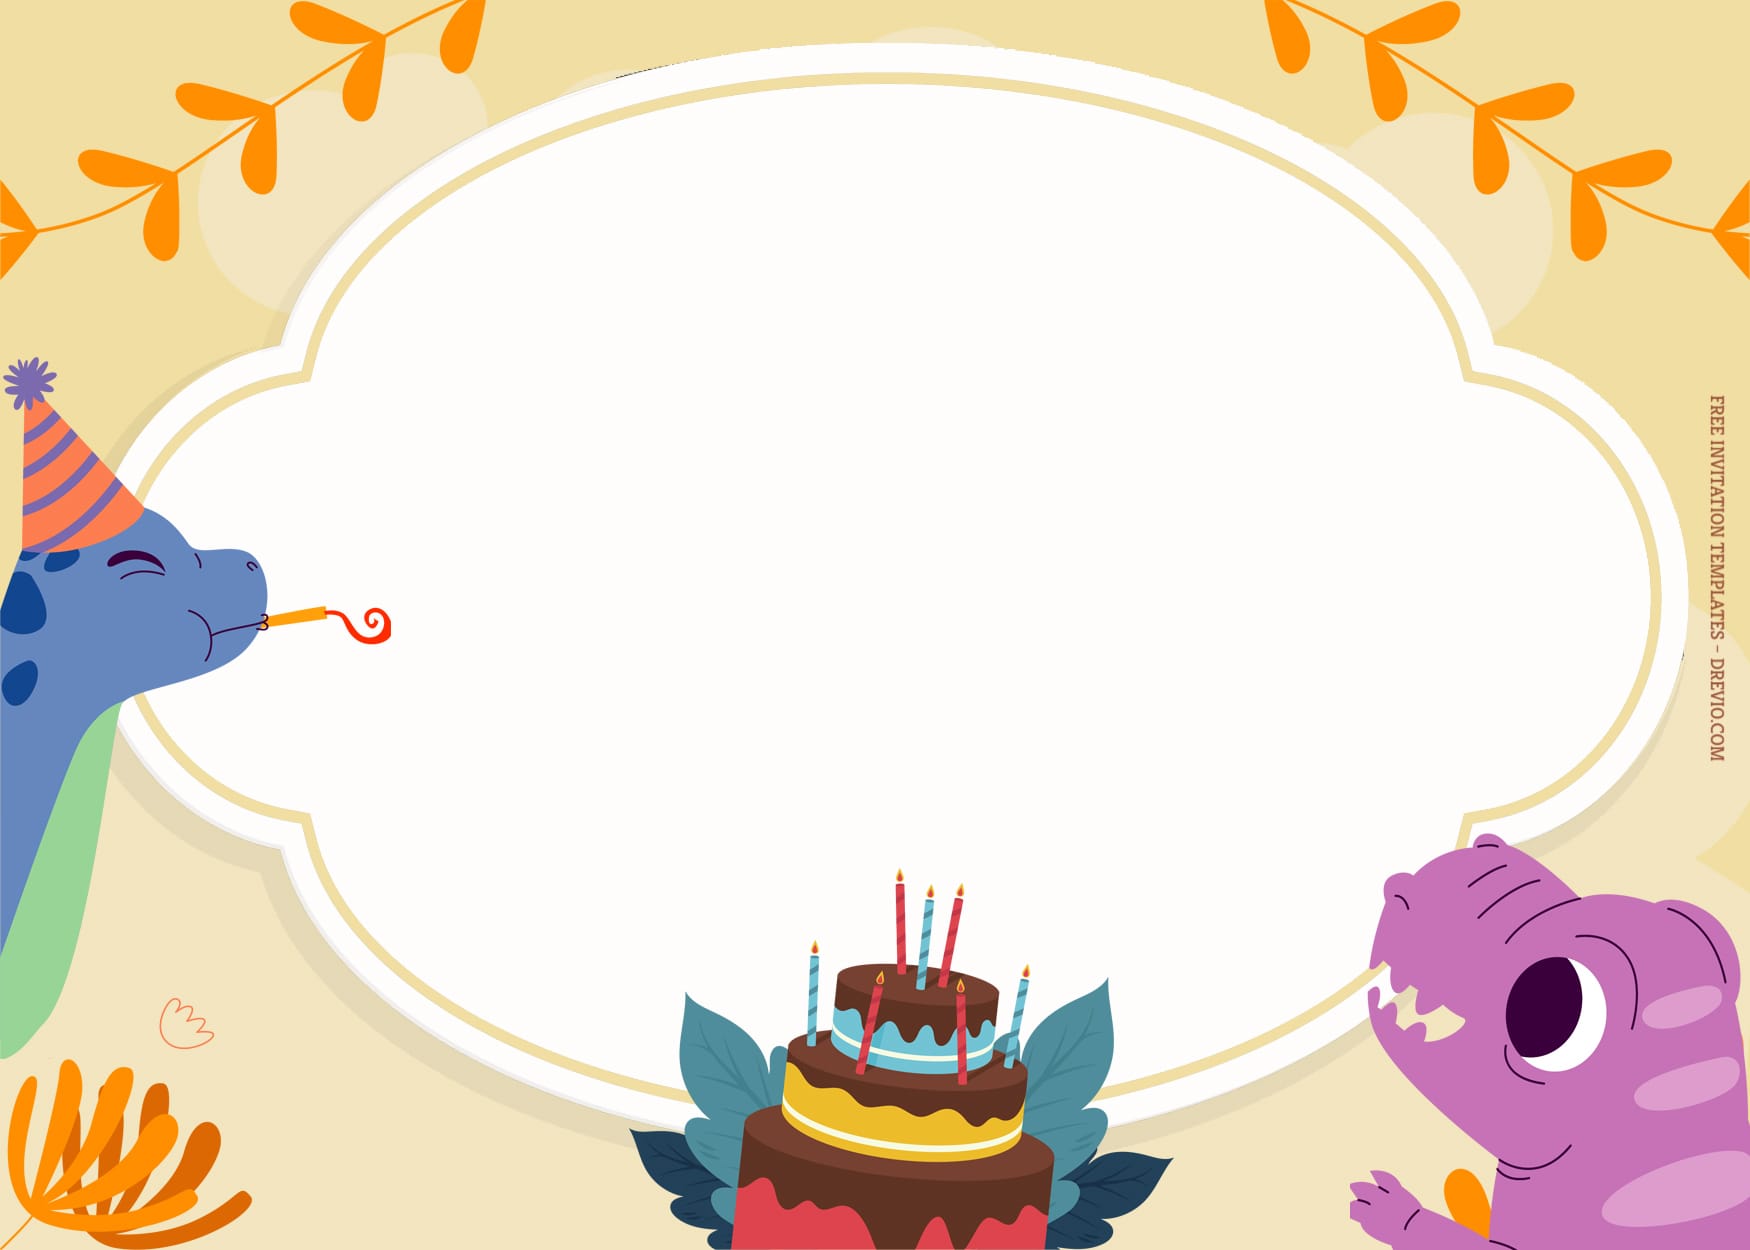 7+ Celebrating Party Dinosaur Birthday Invitation Templates With Bronto And Rex